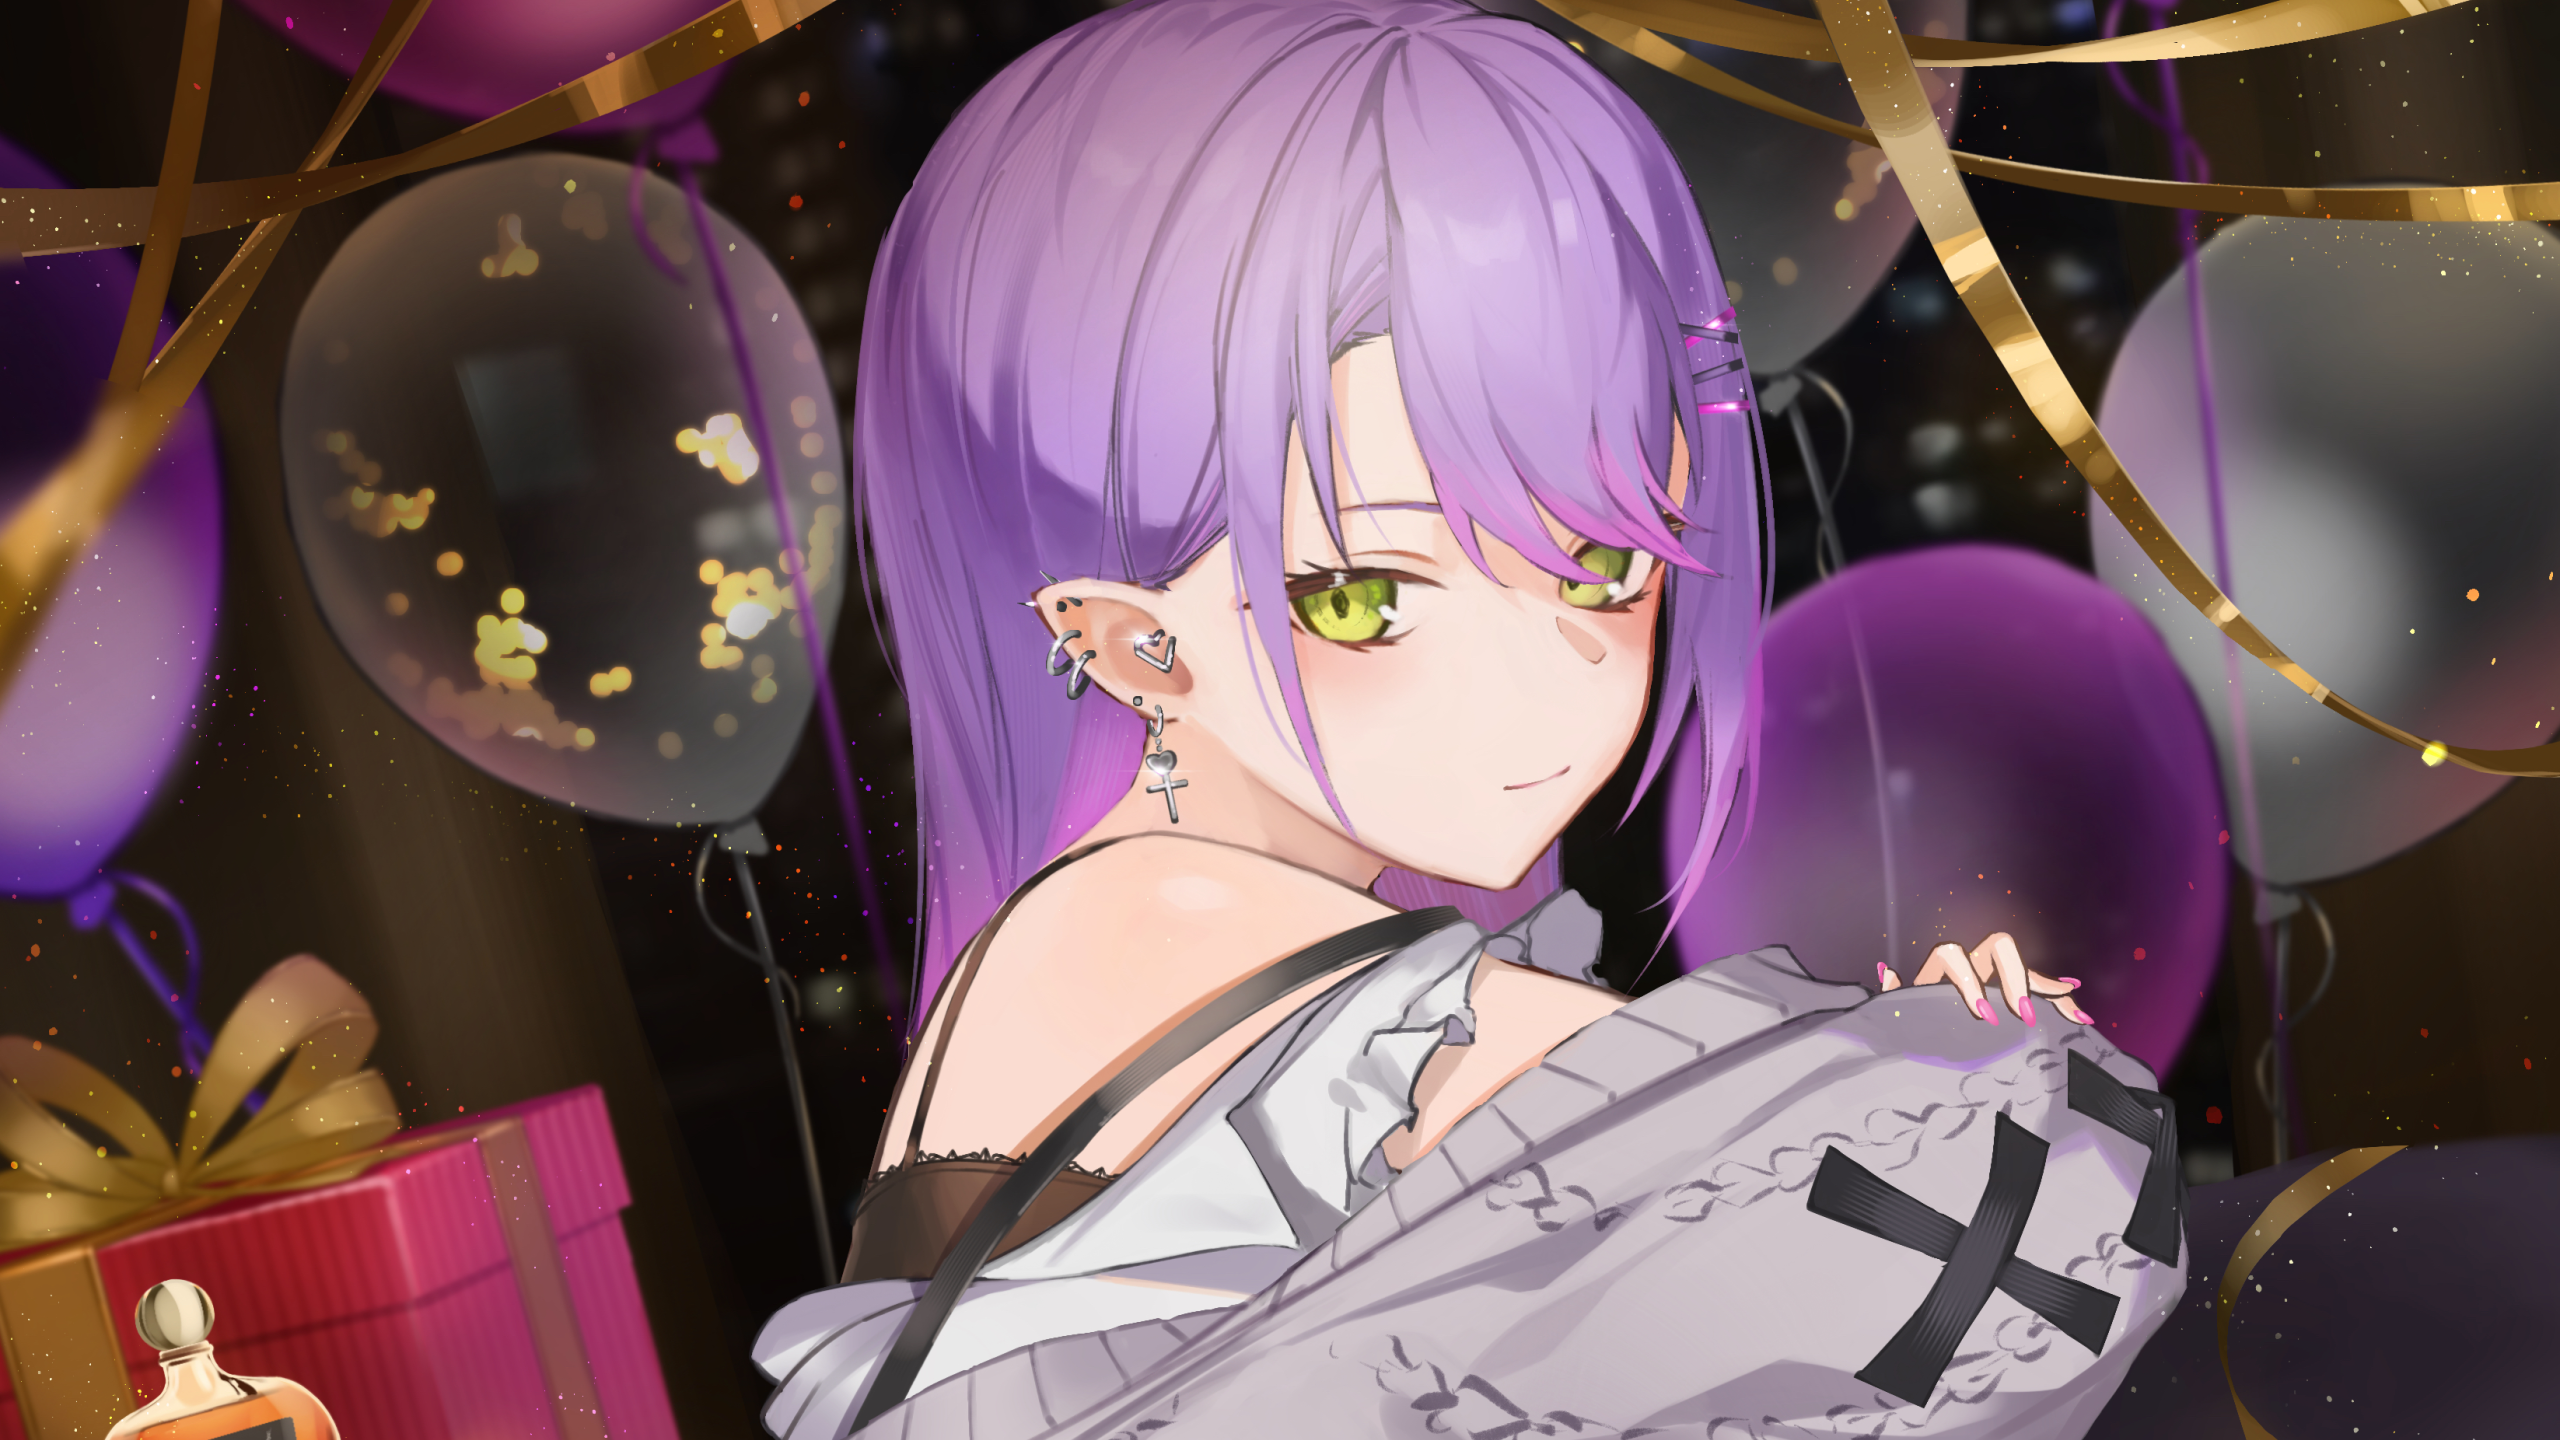 Anime Anime Girls Artwork Balloon Presents Green Eyes Purple Hair Piercing Looking At Viewer Earring 2560x1440